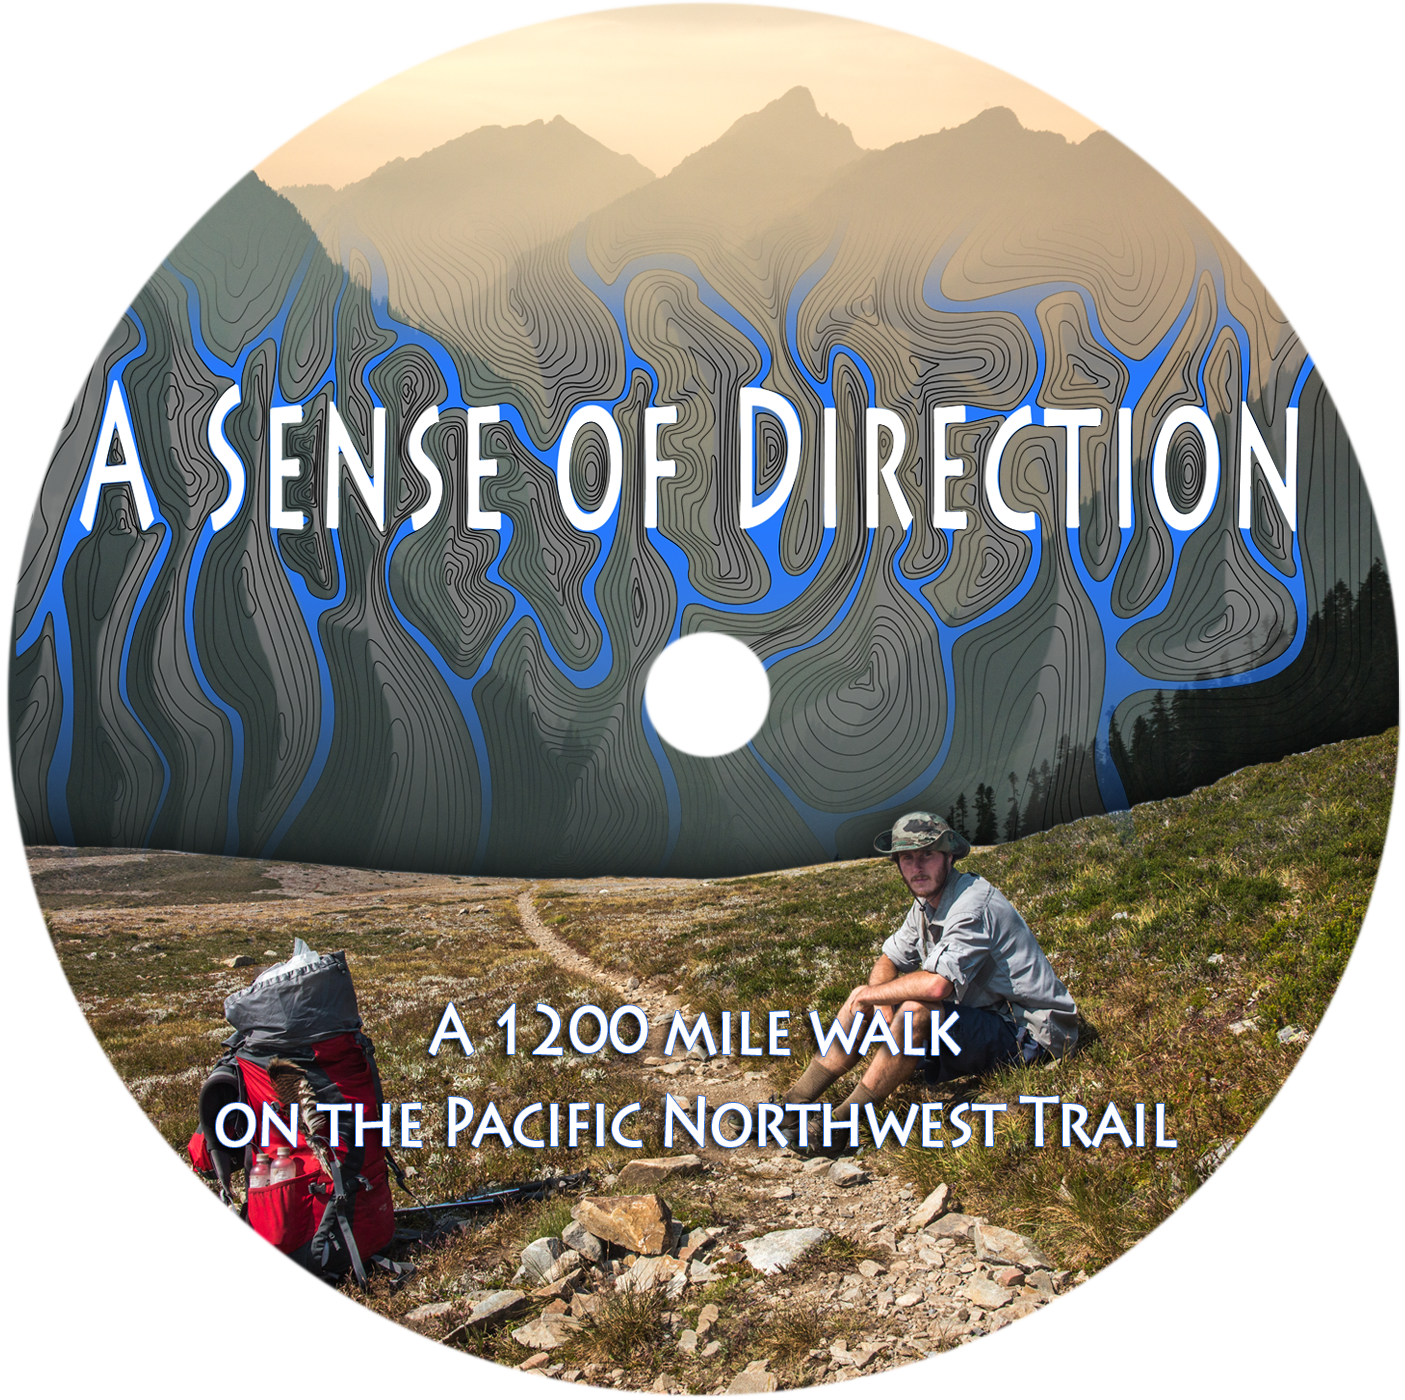 DVD A Sense of Direction